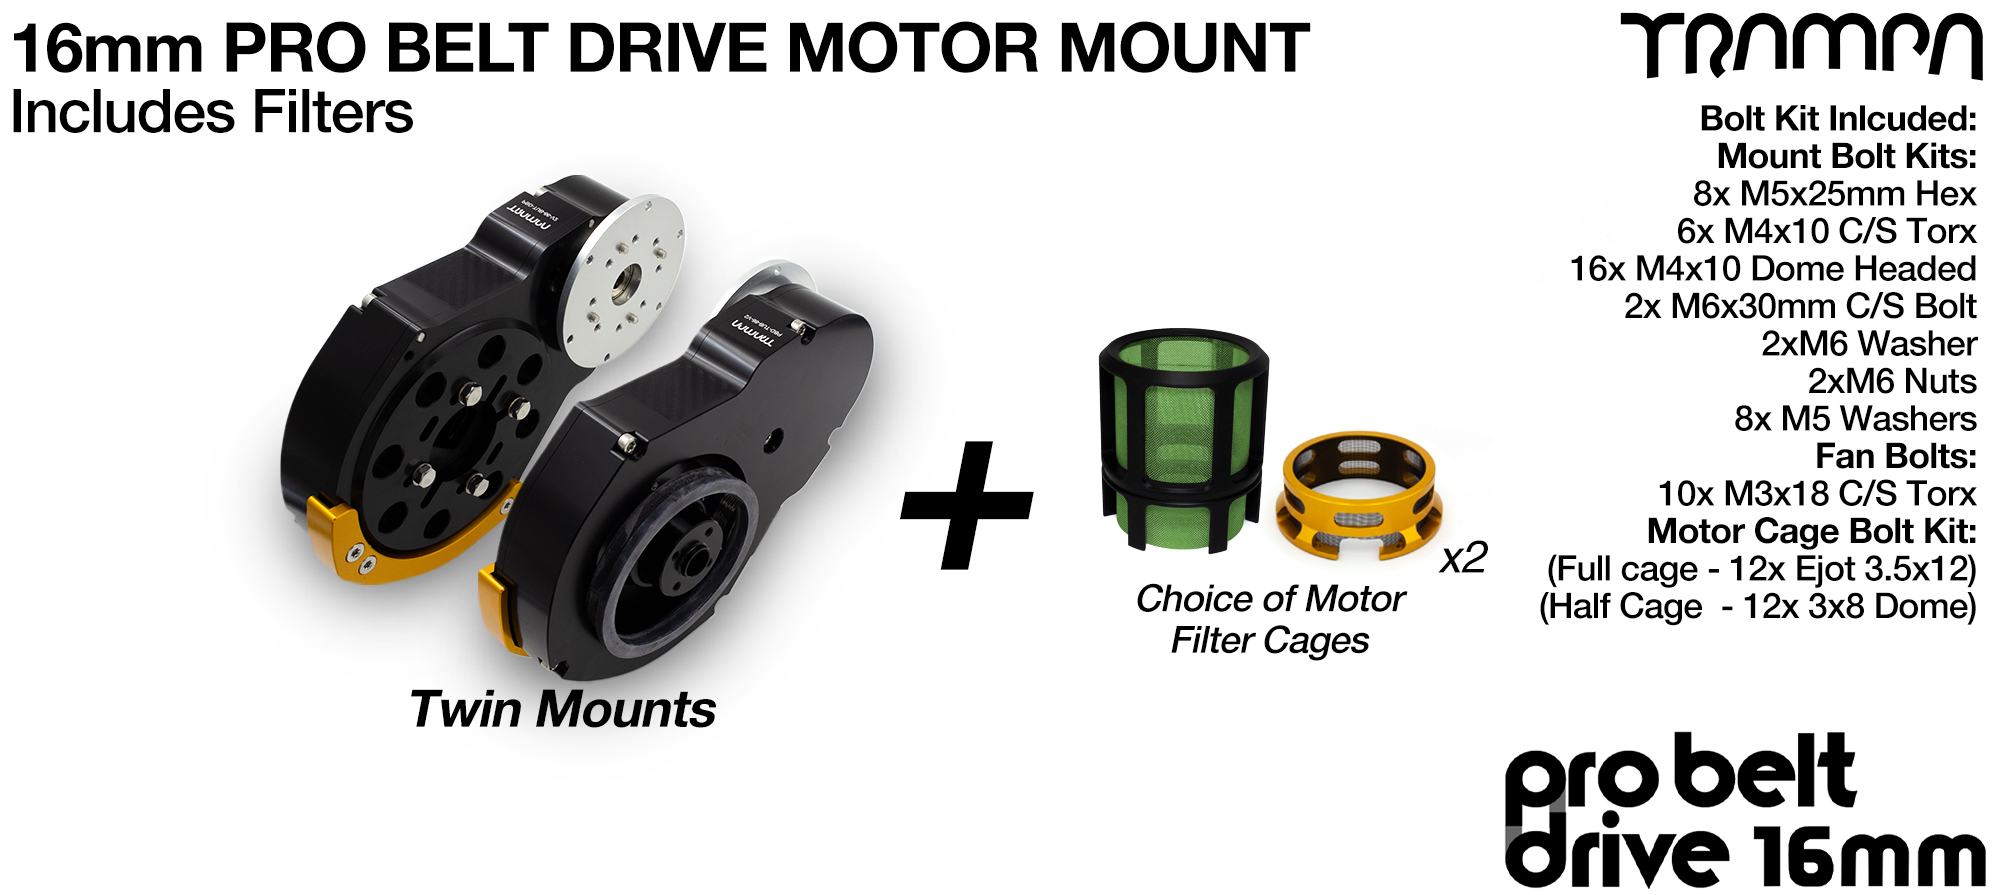 16mm PRO BELT DRIVE Motor Mounts with FILTERS - NO Pulleys & NO Motors